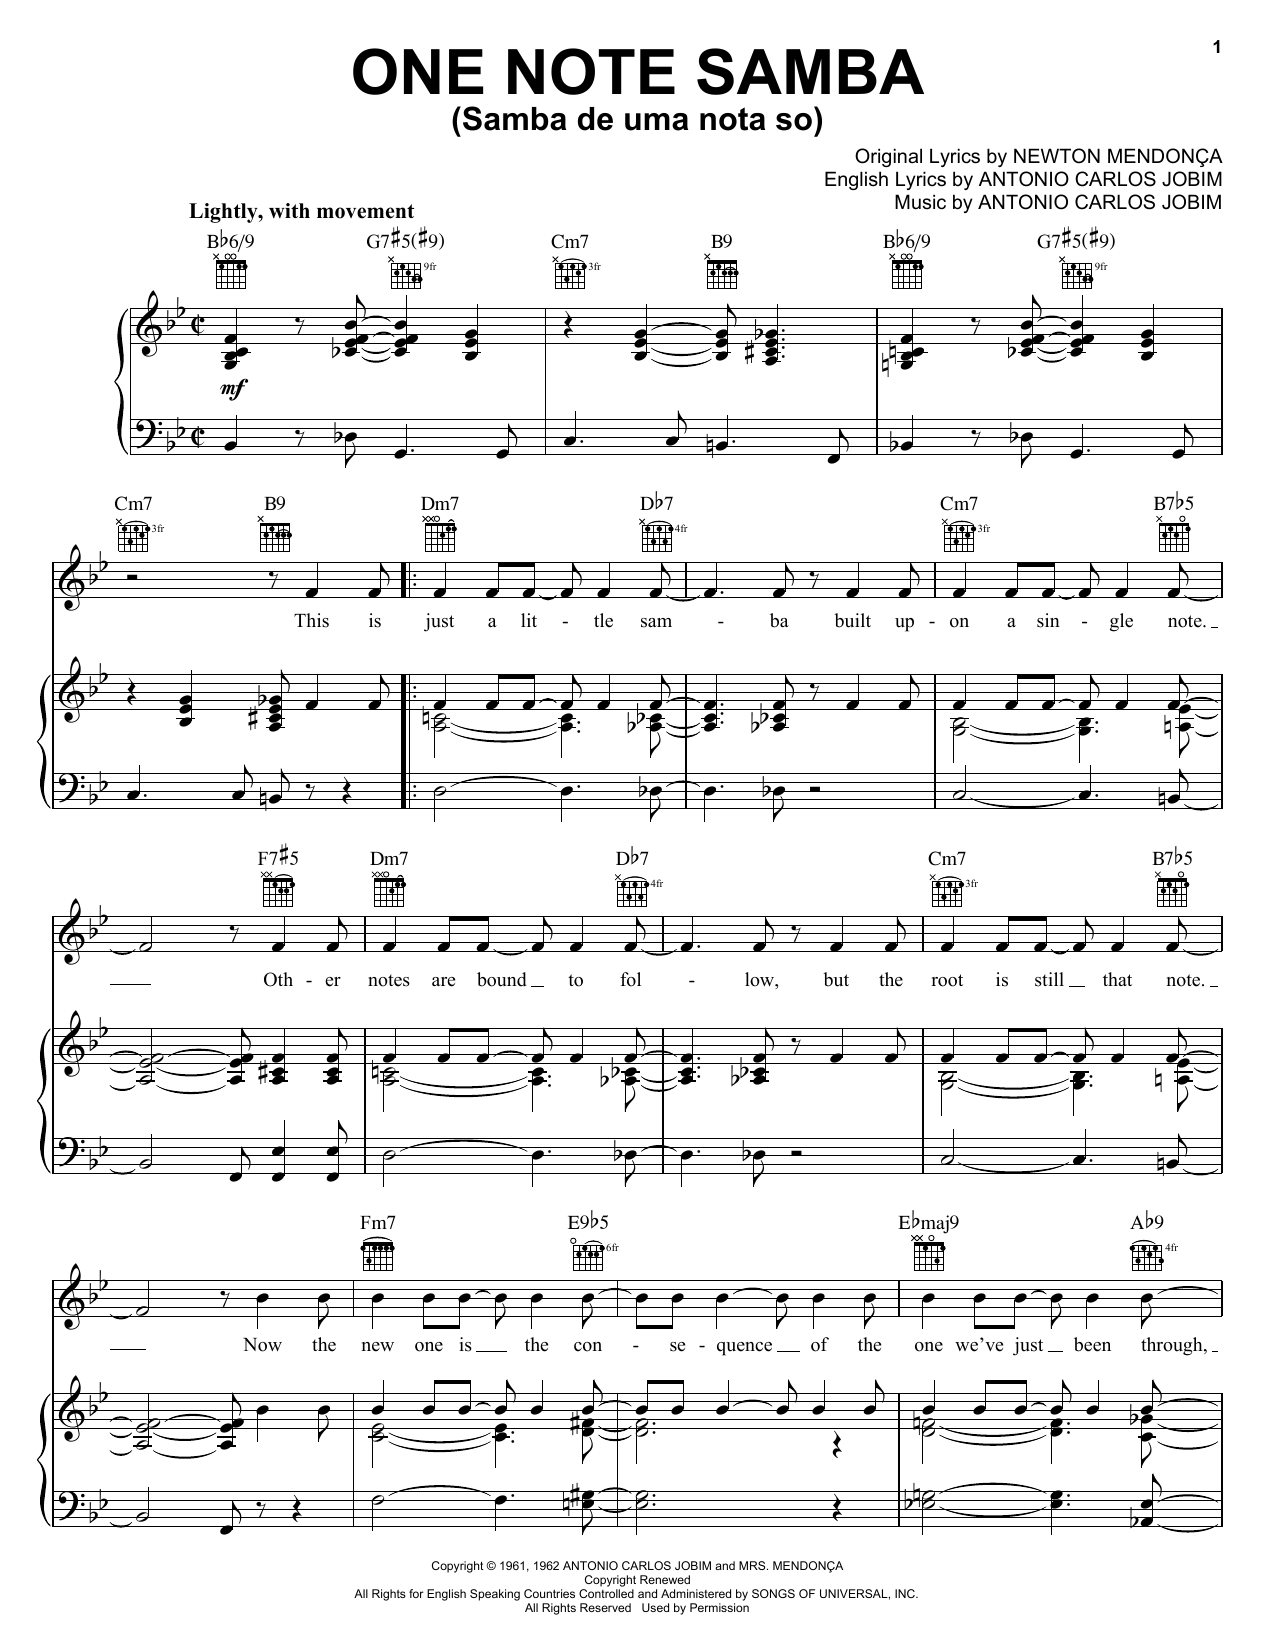 Antonio Carlos Jobim One Note Samba (Samba De Uma Nota So) Sheet Music Notes & Chords for Trombone - Download or Print PDF